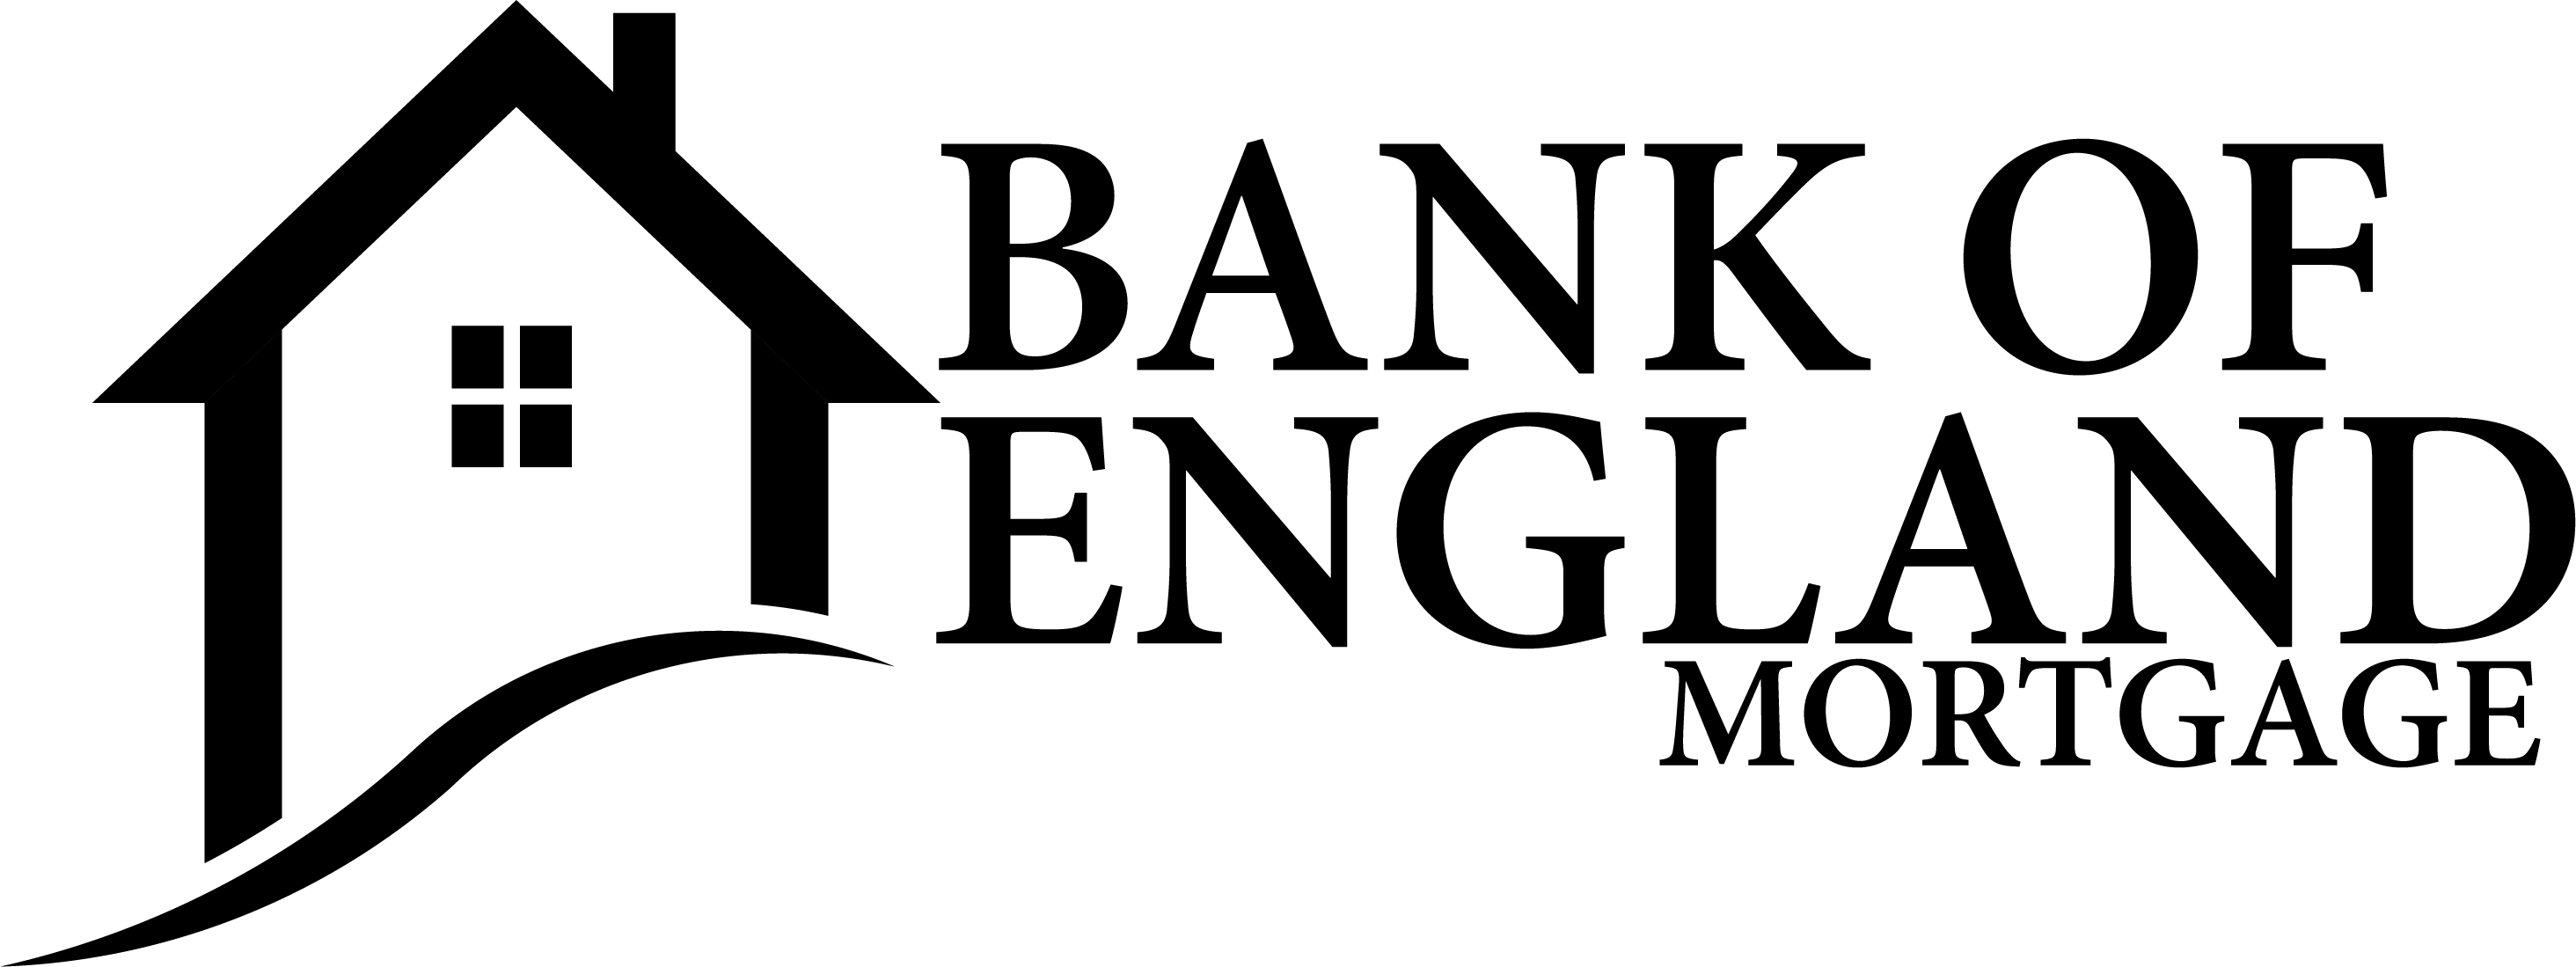 tupelo logo